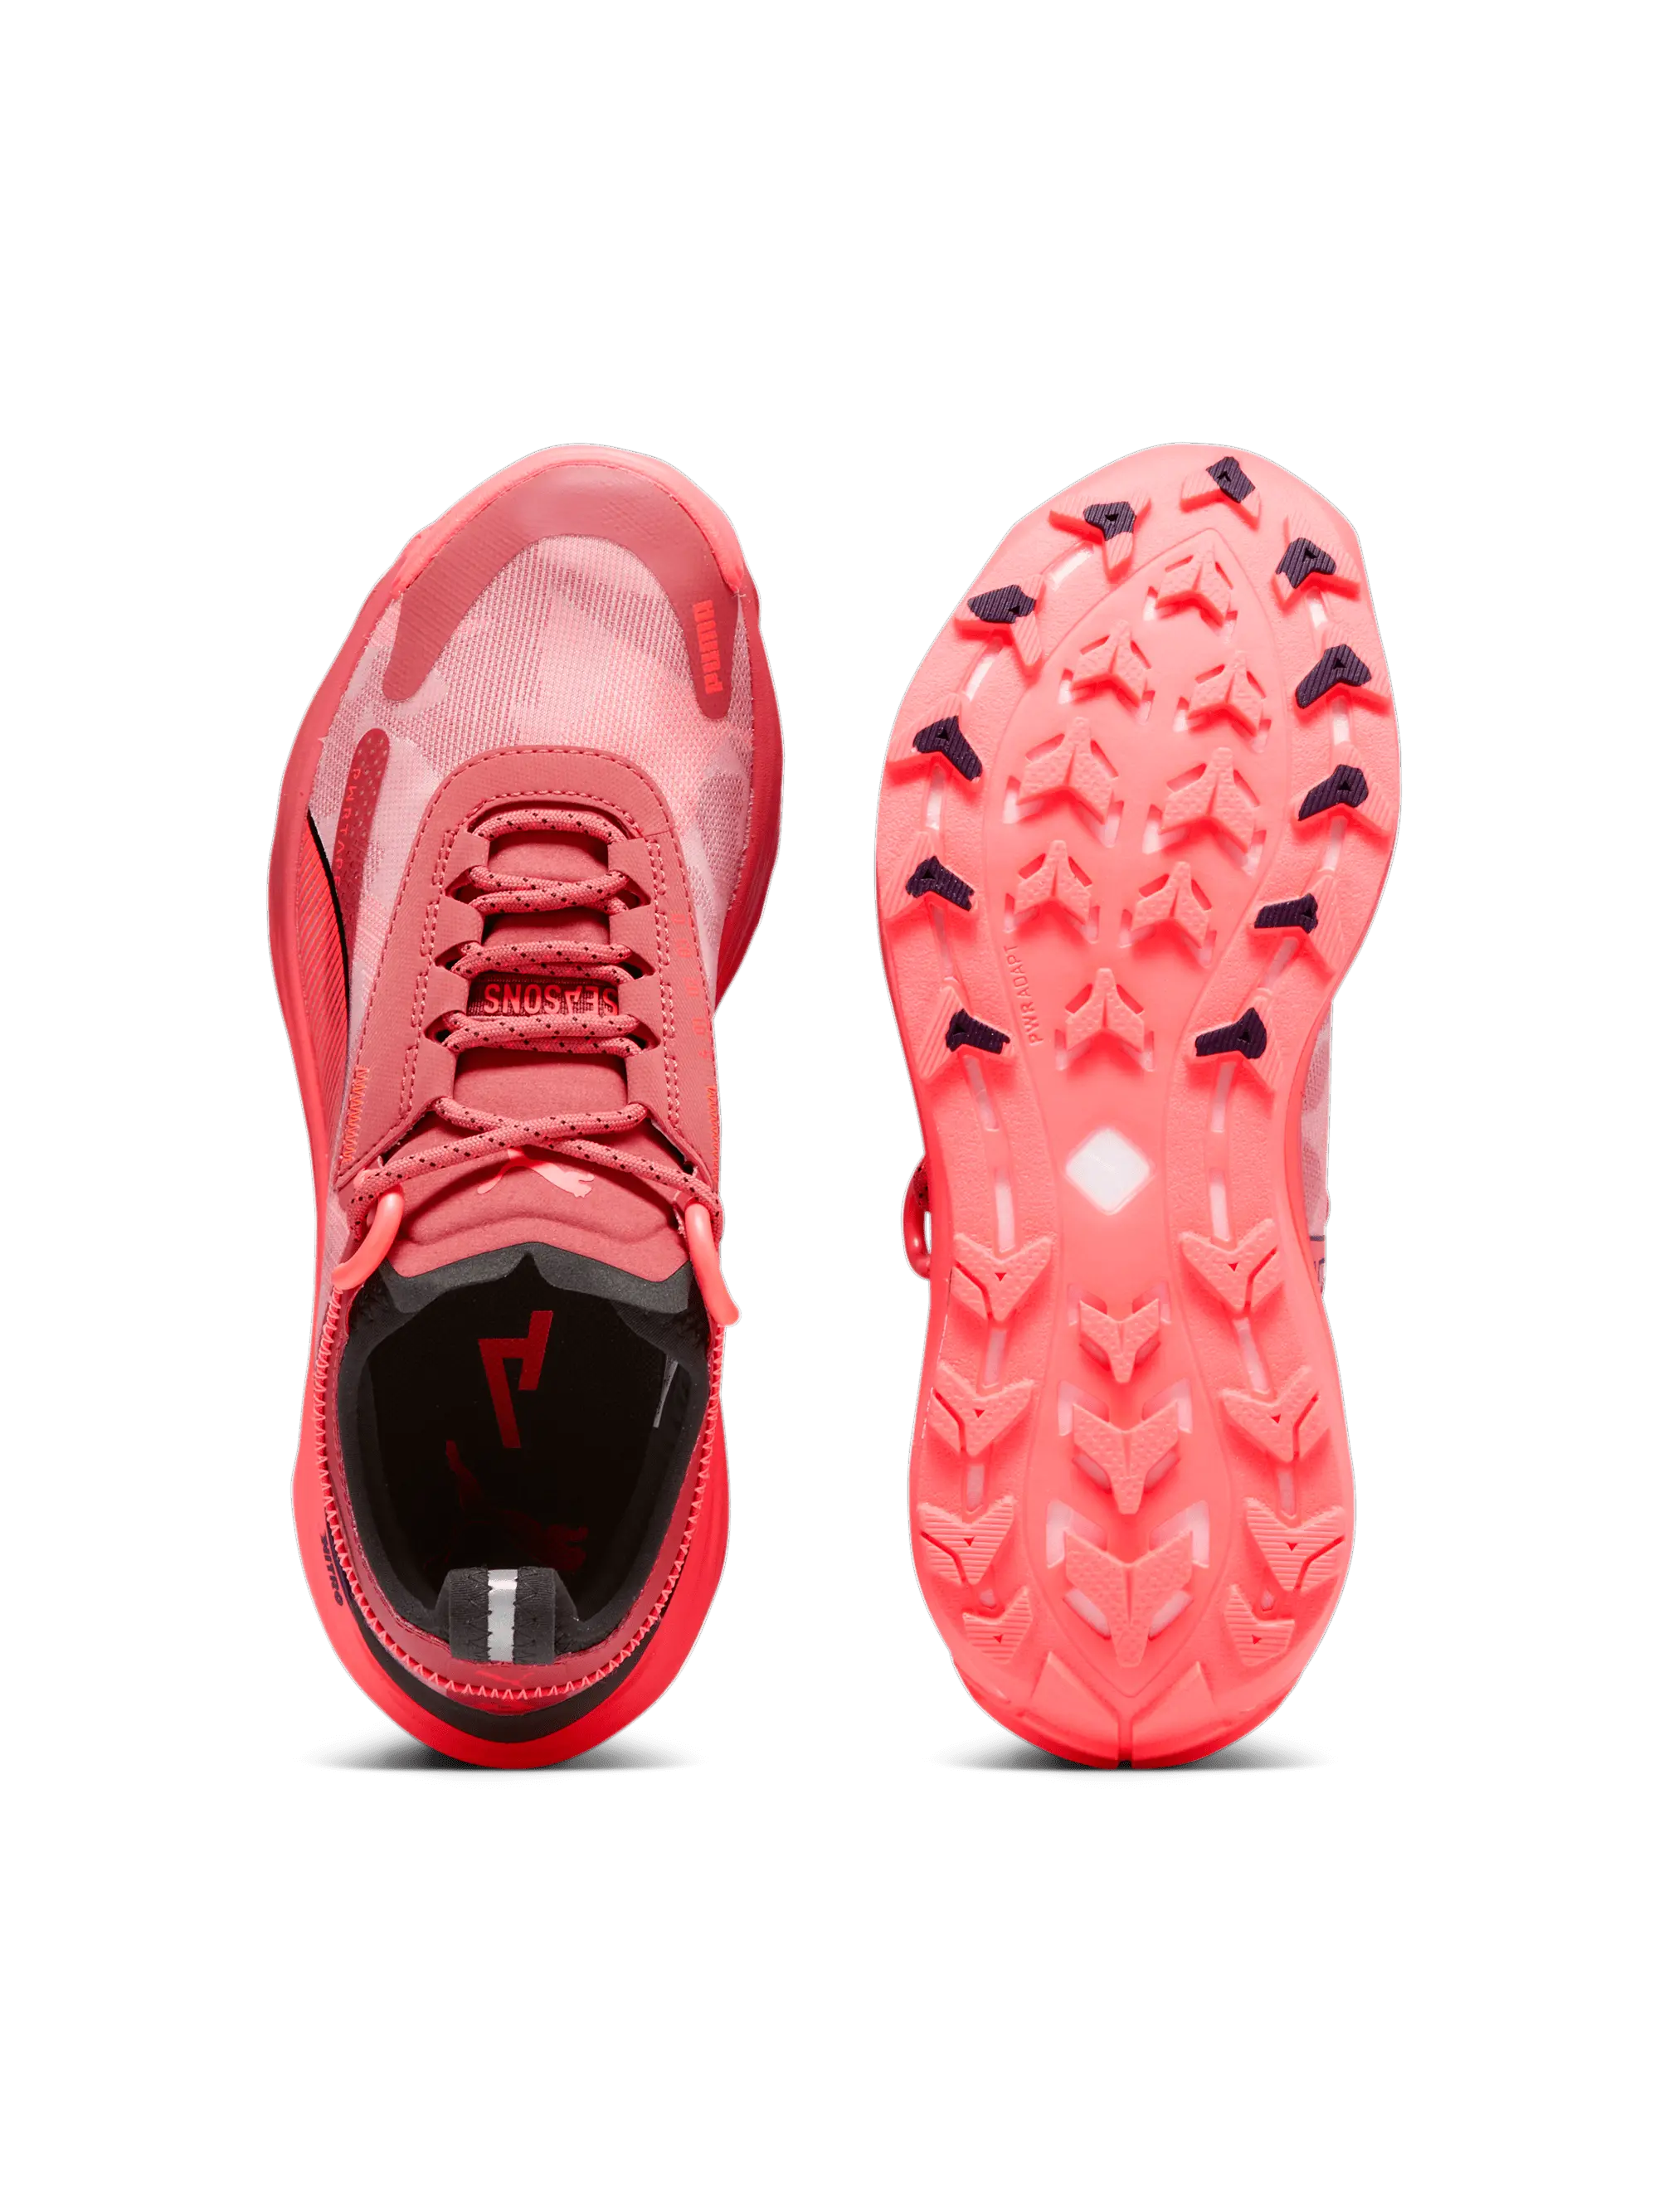 SEASONS Voyage NITRO™ 3 GORE-TEX Women's Trail Running Shoes